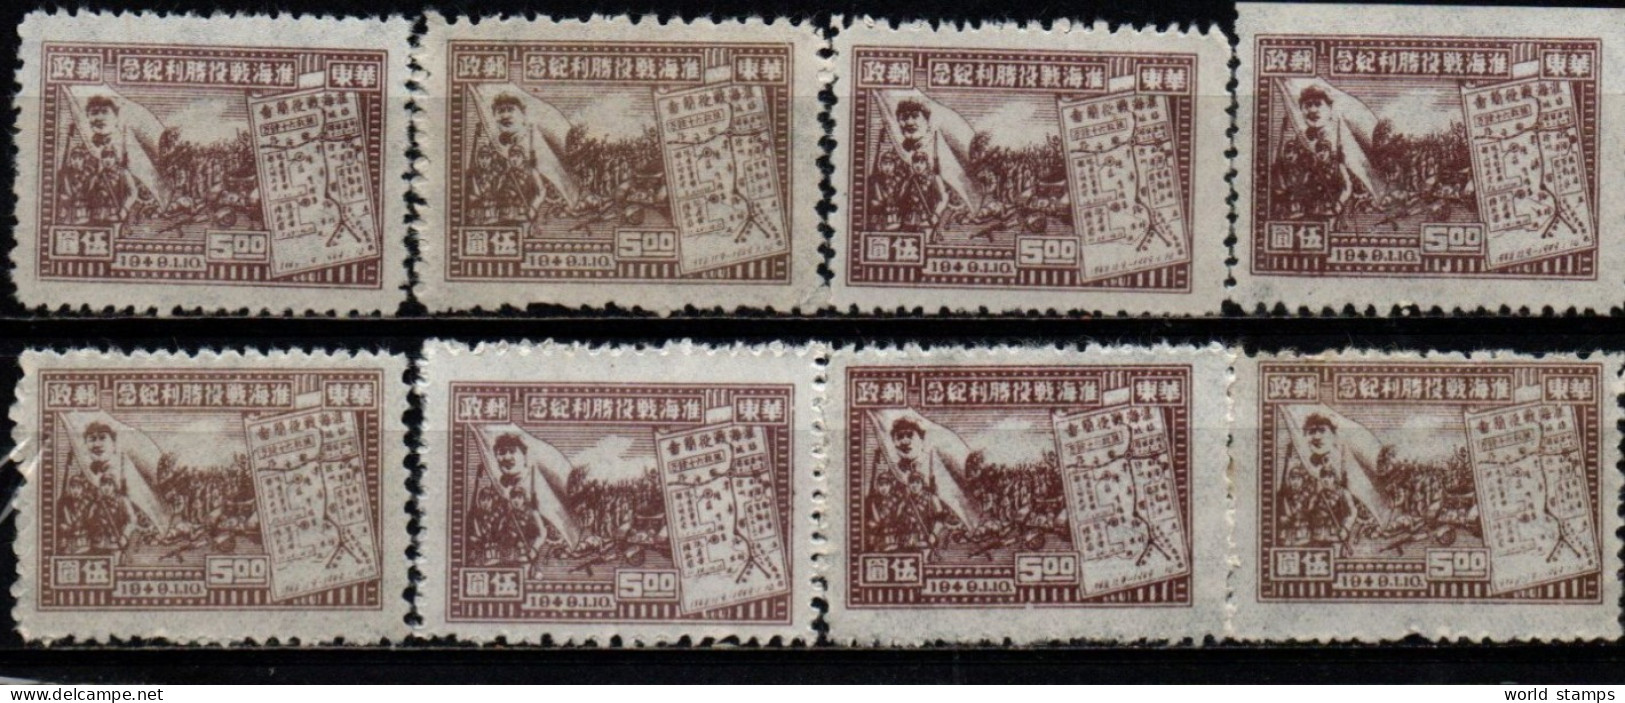 CHINE ORIENTALE 1949 SANS GOMME - Cina Orientale 1949-50